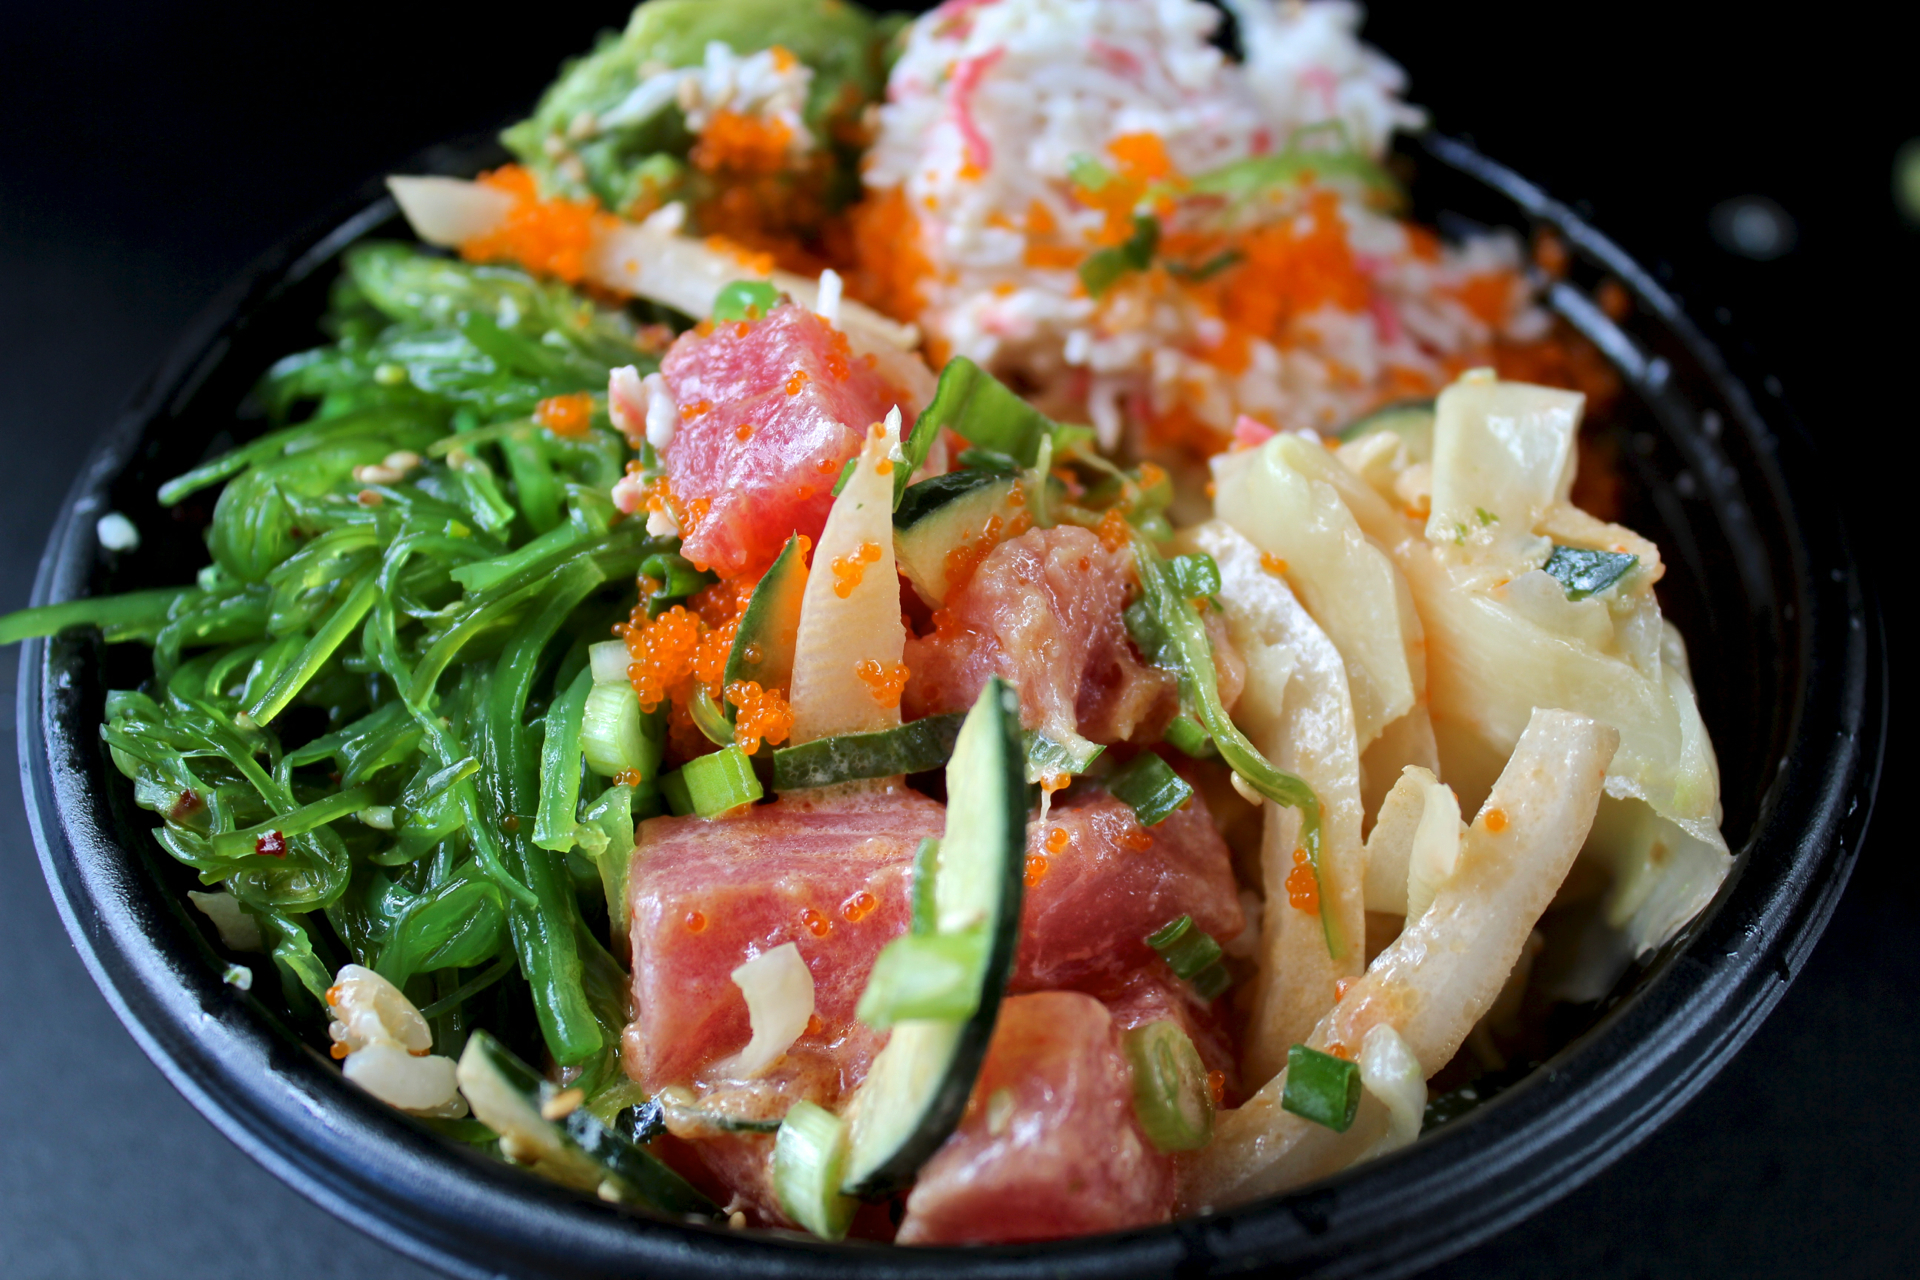 Ahi tuna and salmon with seaweed salad, ginger, cucumbers and green onions at Poki Bowl.